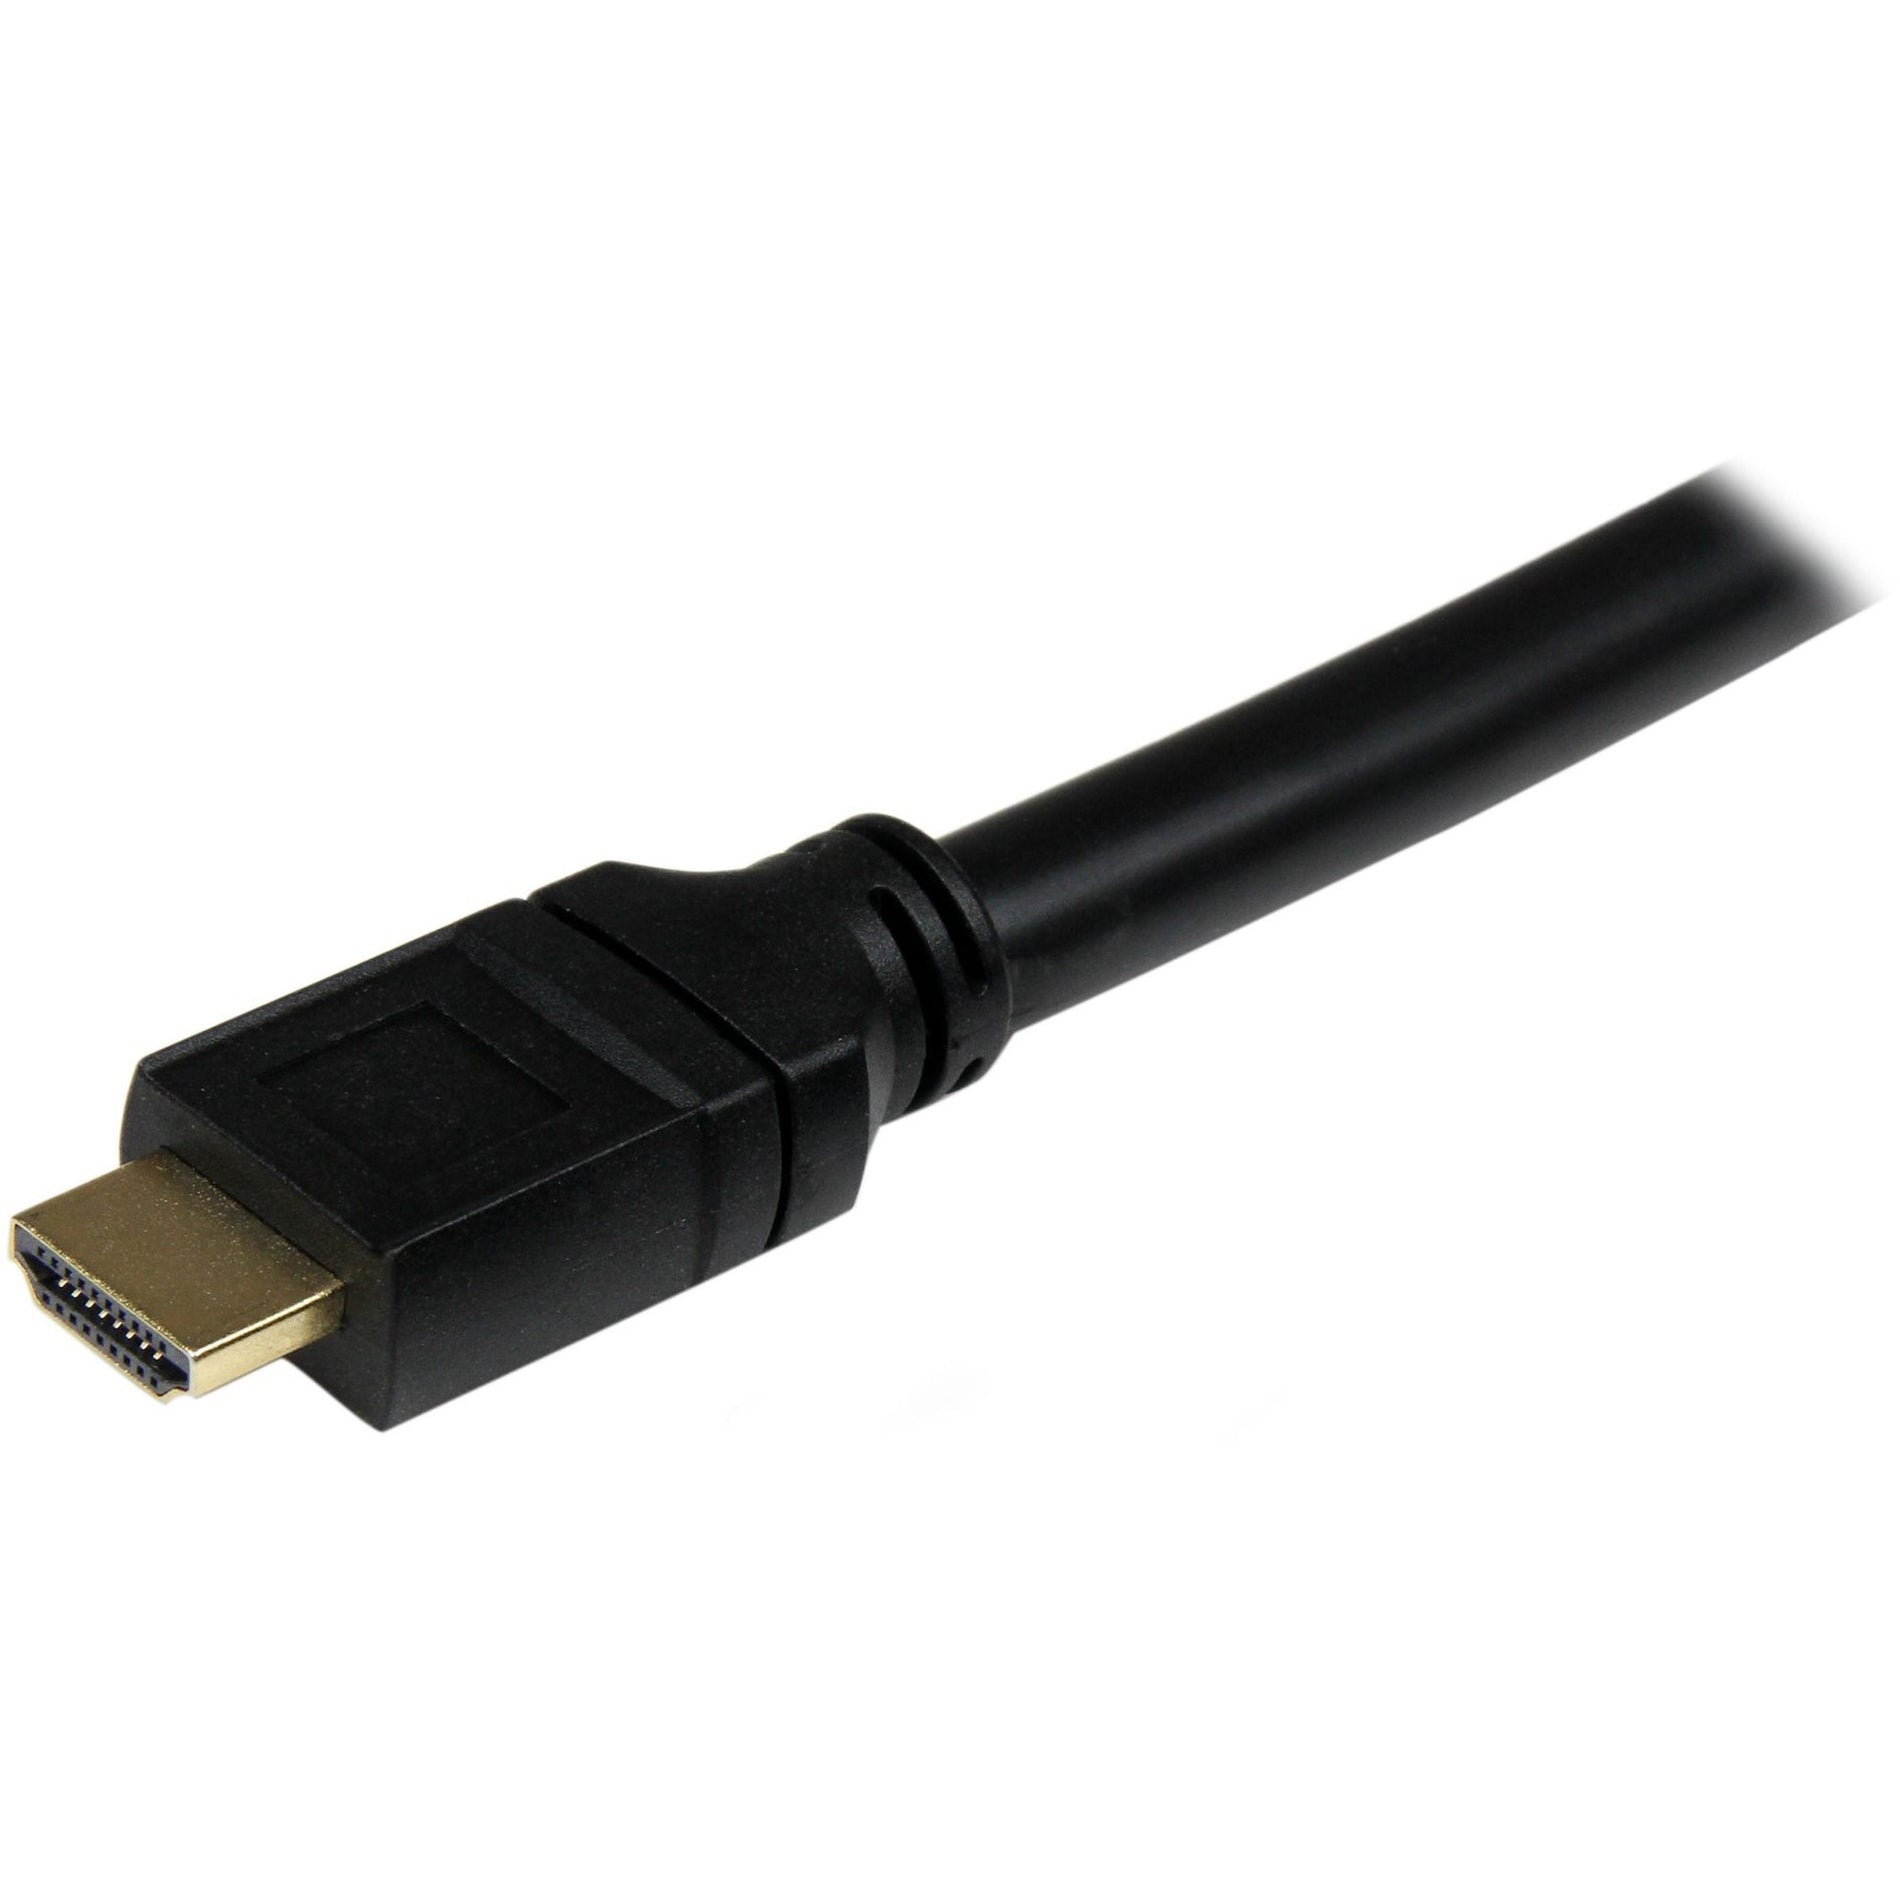 StarTech.com HDPMM25 كابل HDMI عالي السرعة معتمد بمعايير الفلين 25 قدم - HDMI إلى HDMI - ذكر إلى ذكر، معدل نقل بيانات 10.2 جيجابت في الثانية، دقة مدعومة 4096 x 2160.